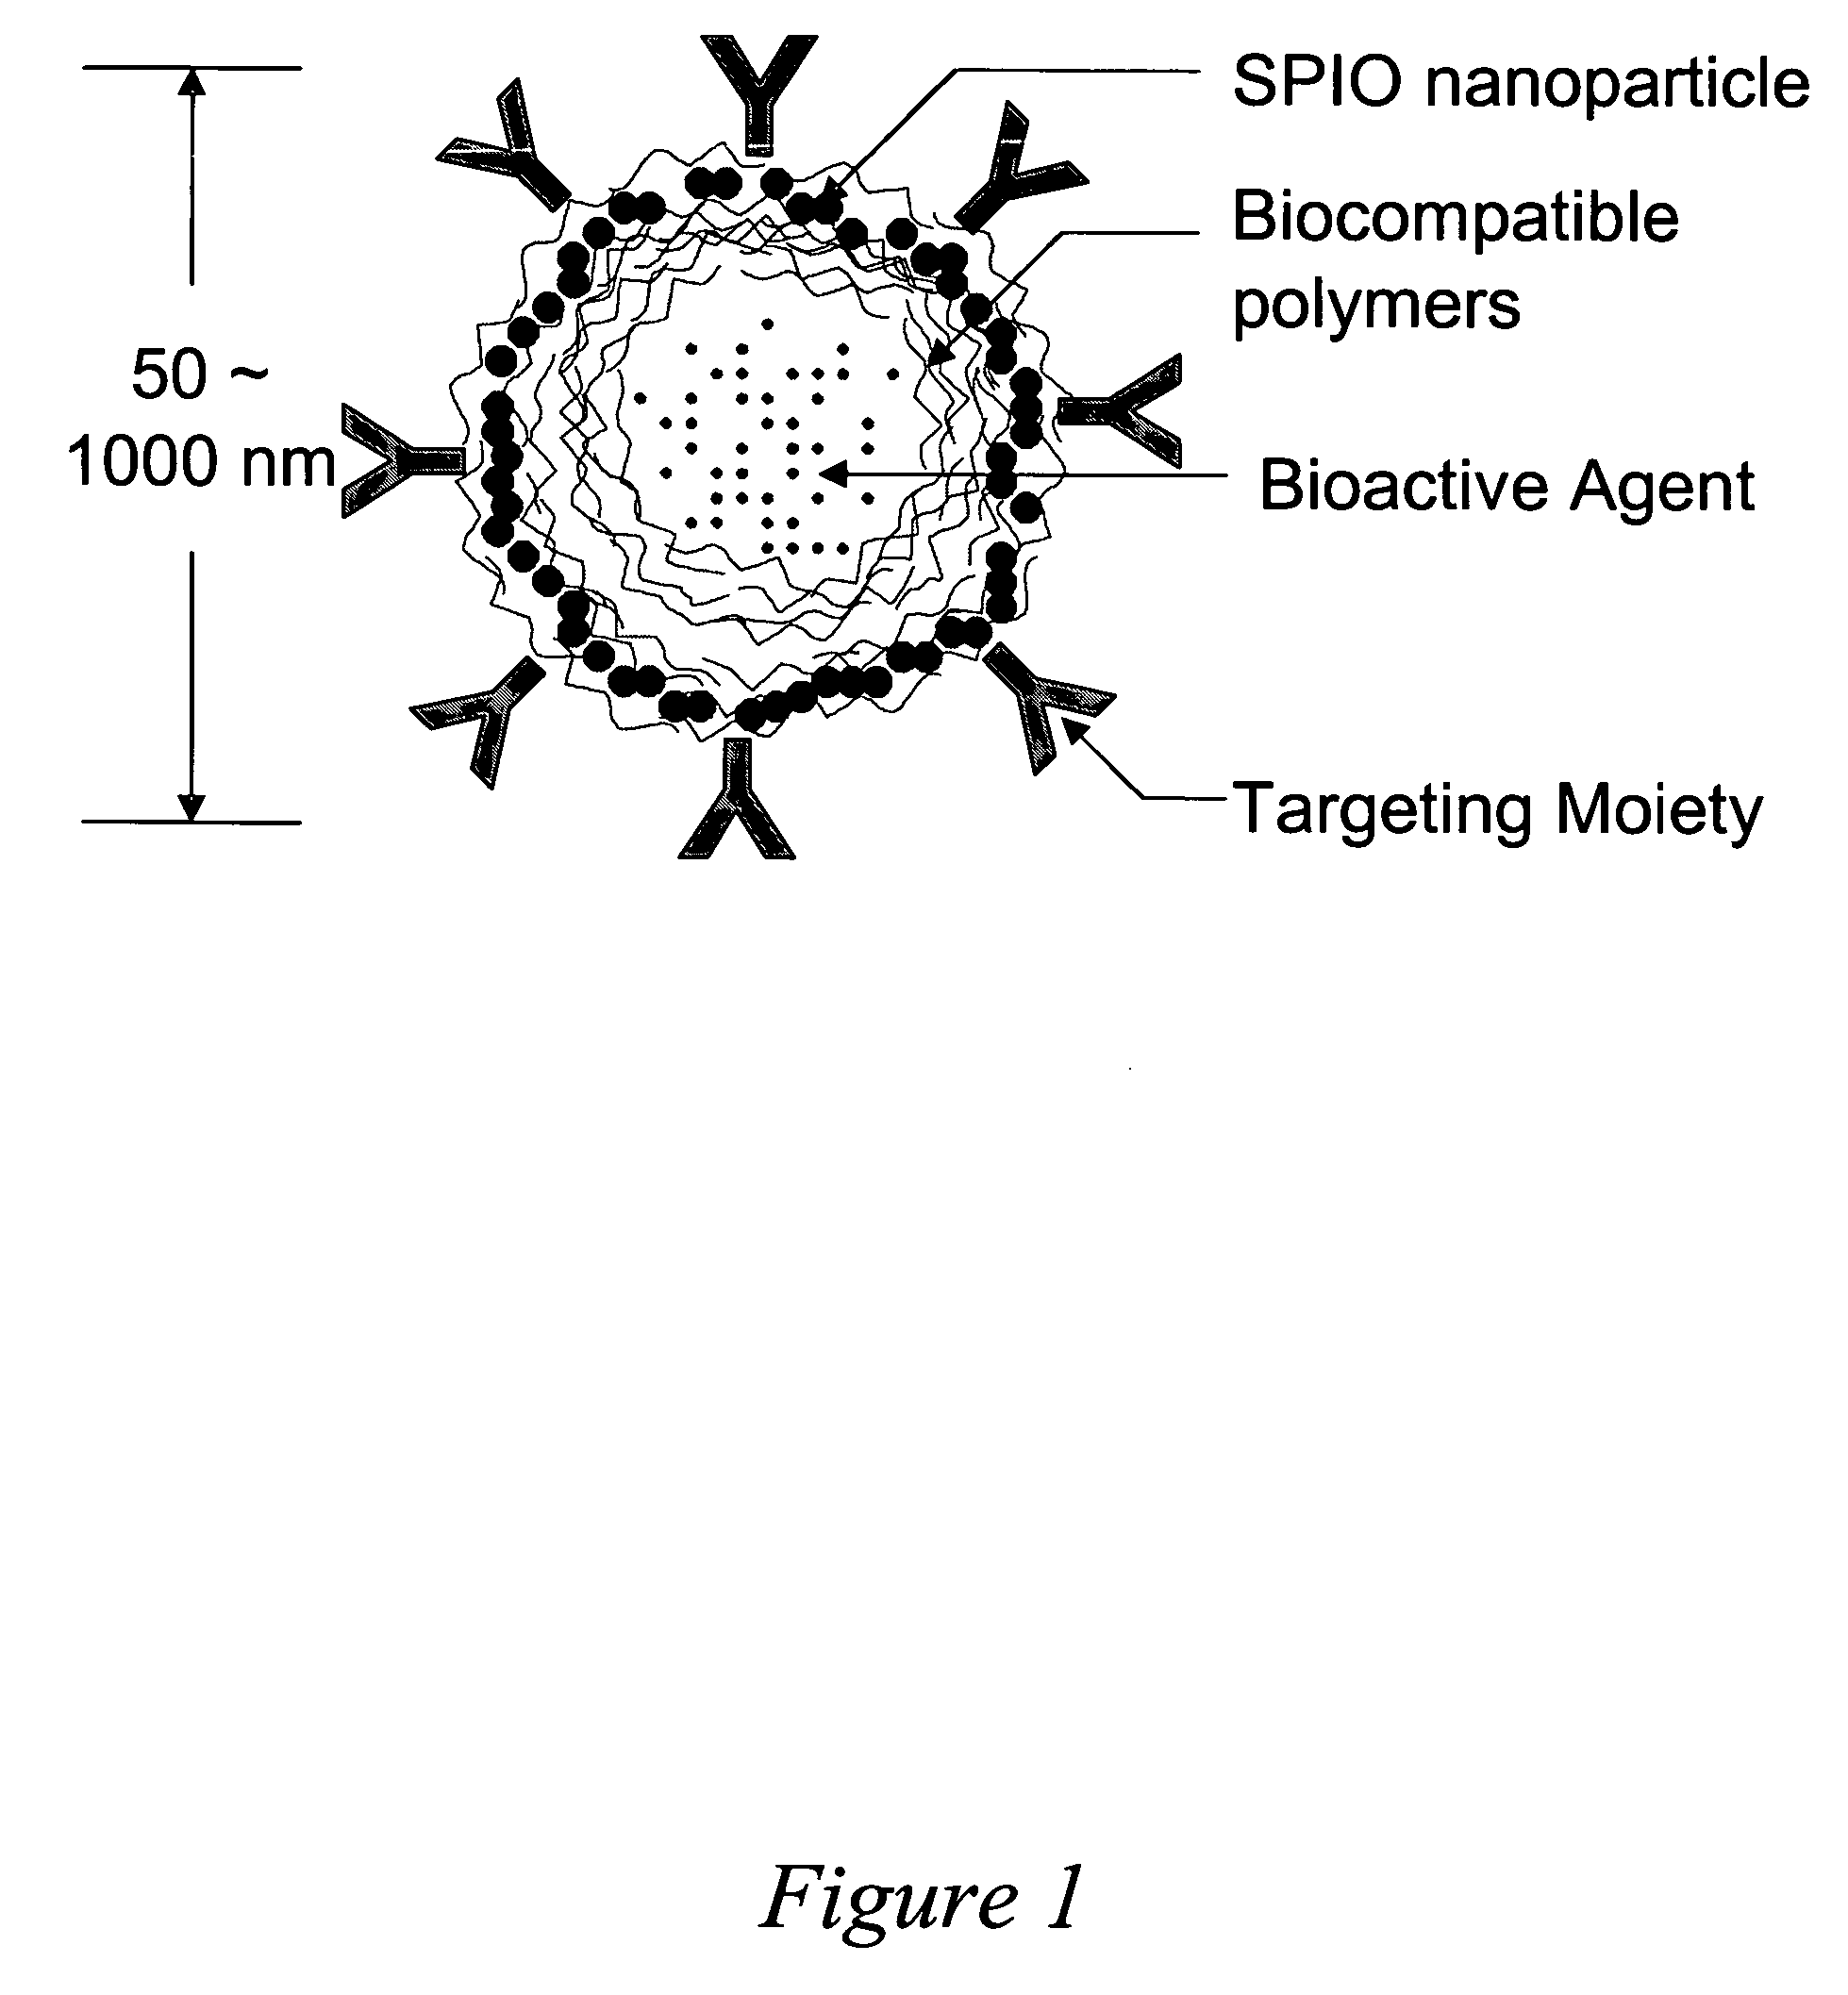 Drug delivery system based on polymer nanoshells